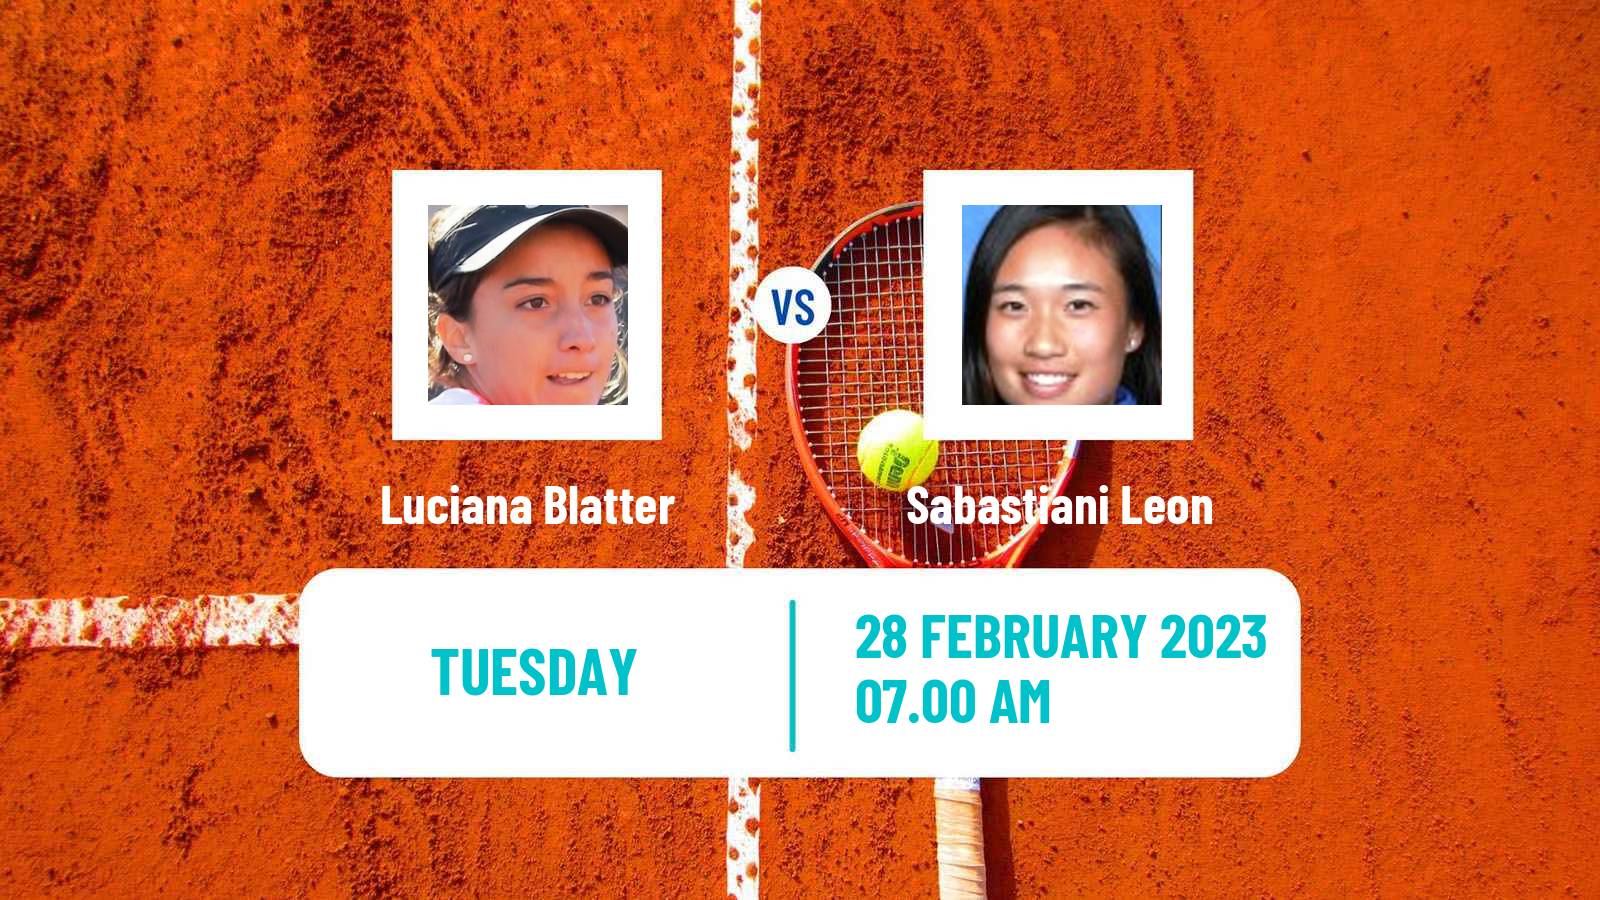 Tennis ITF Tournaments Luciana Blatter - Sabastiani Leon